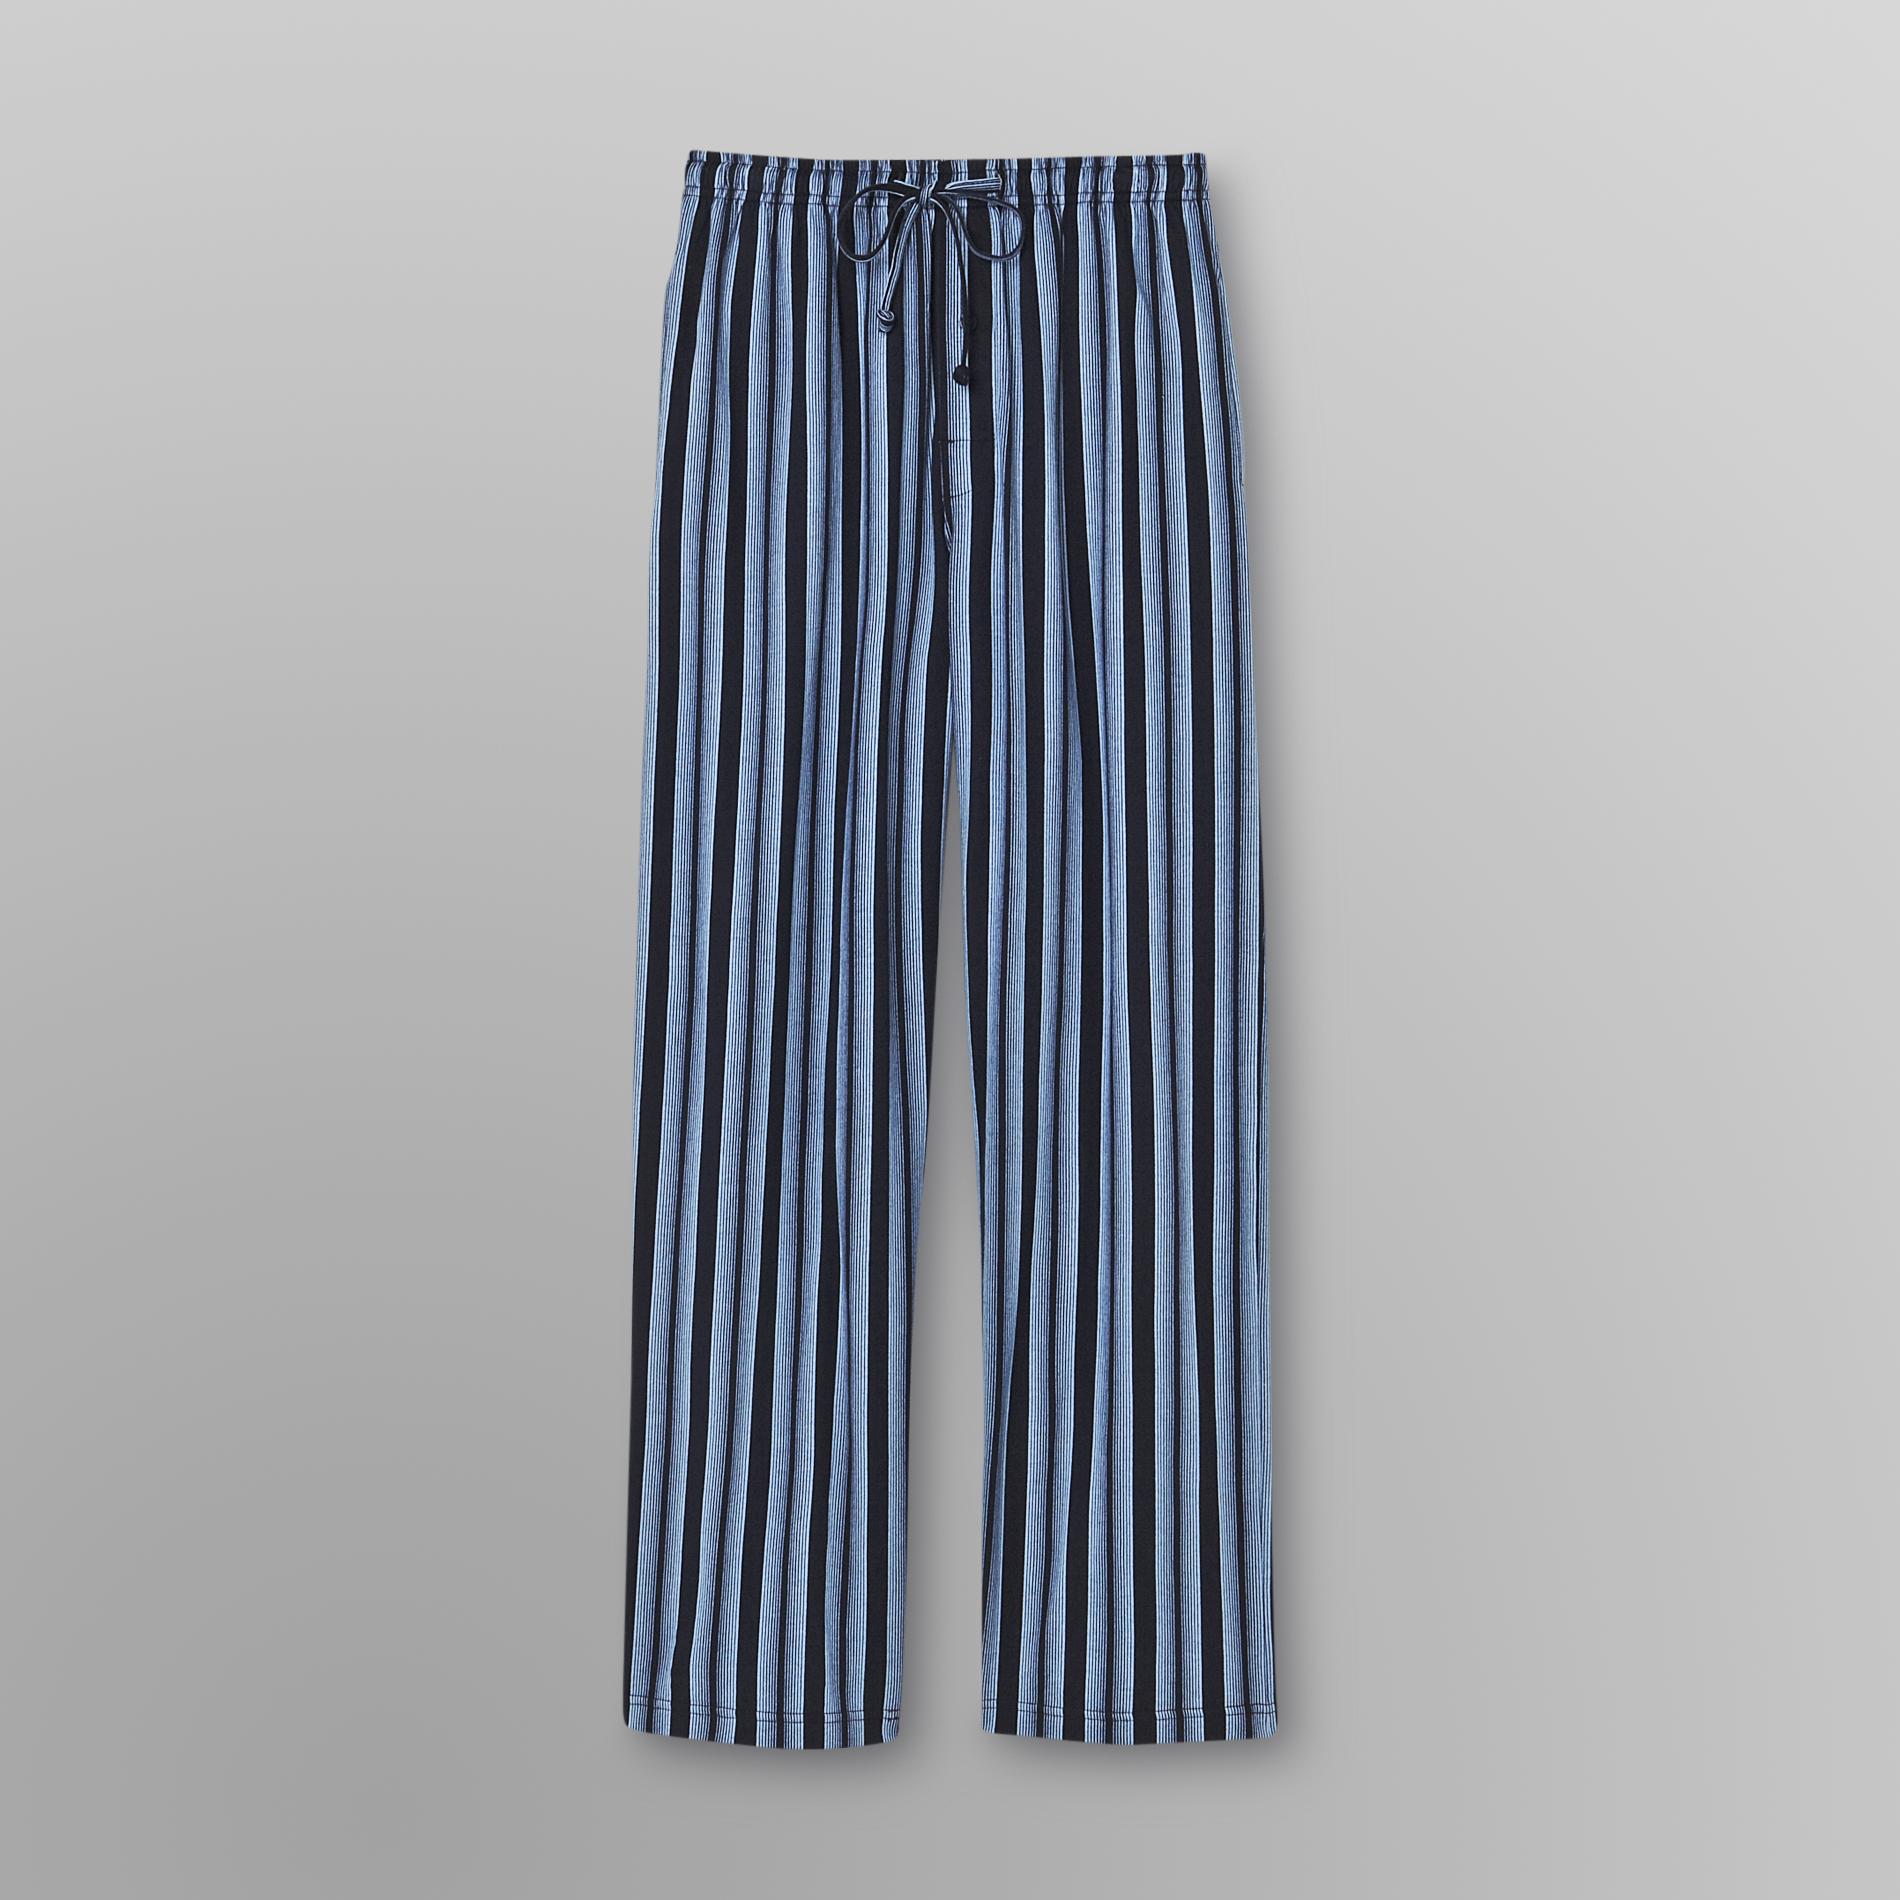 Covington Men's Pajama Pants - Striped